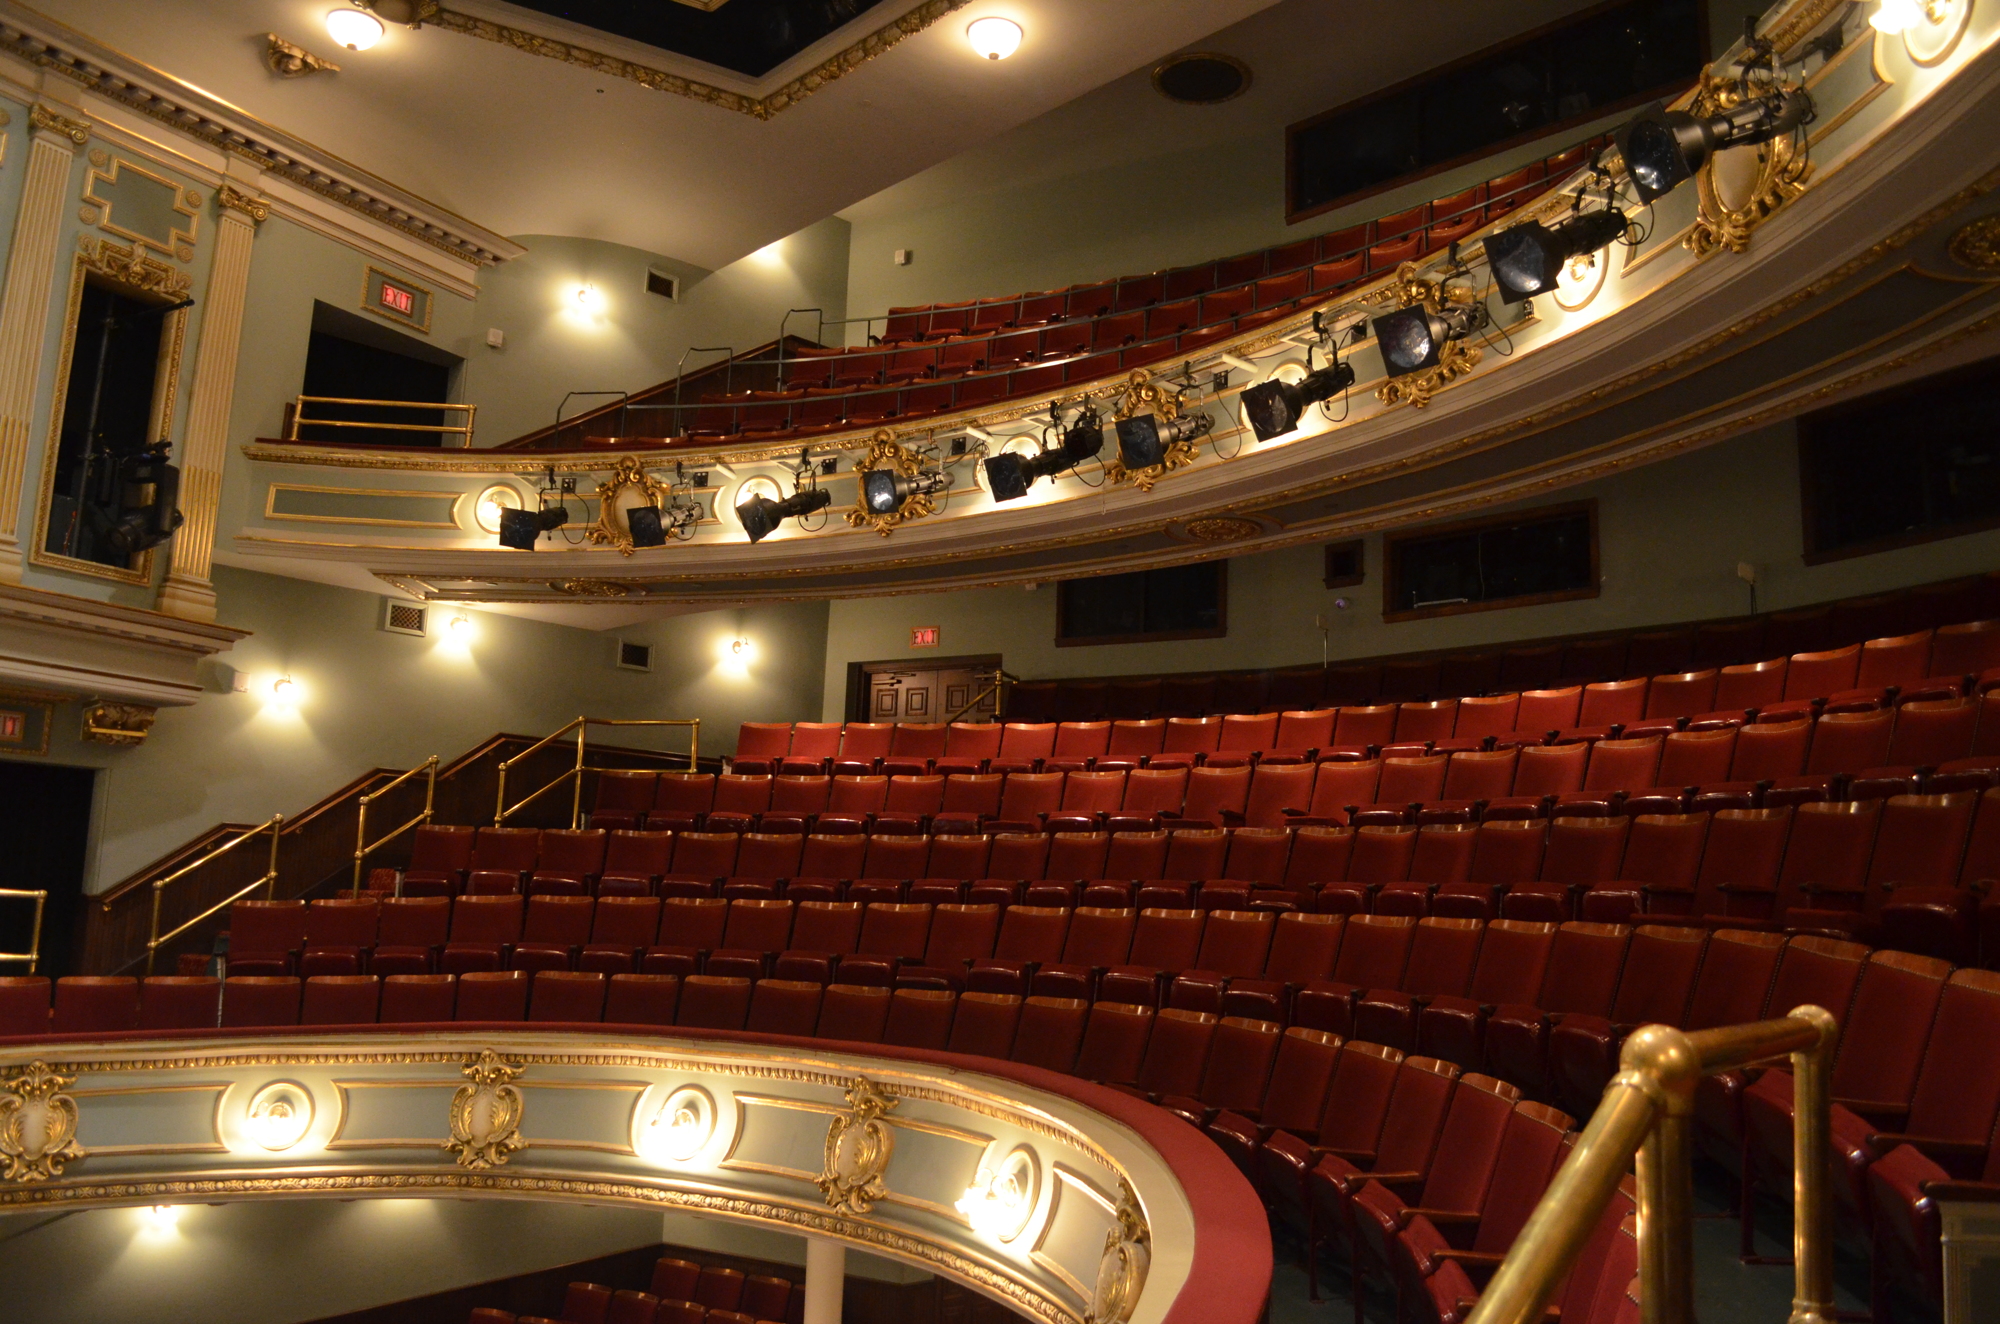 The interior of the Mertz Theatre.